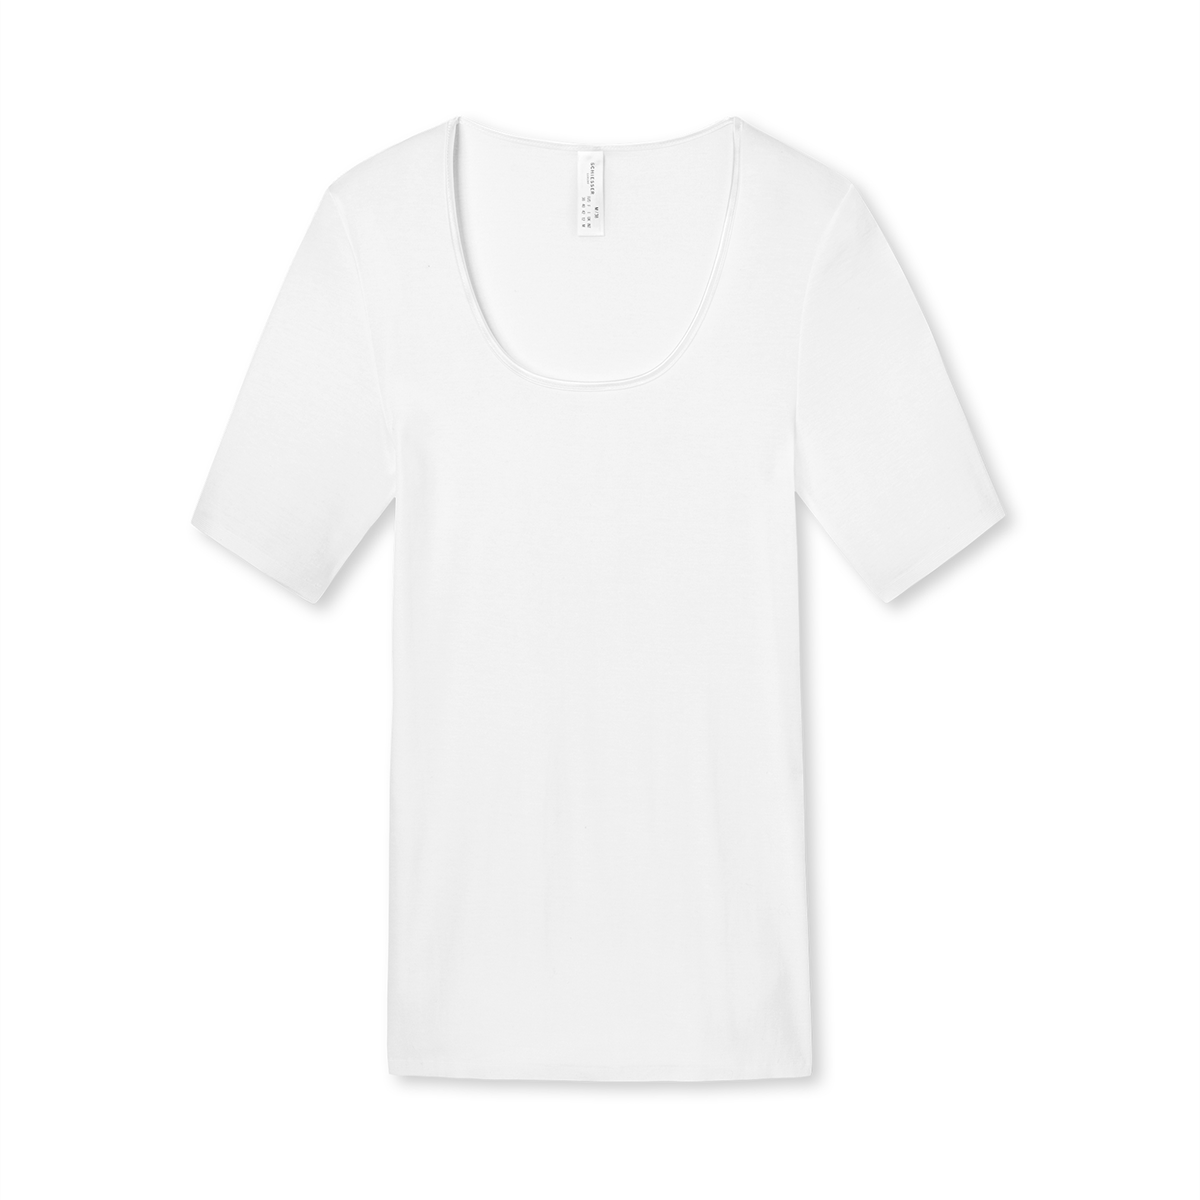 Se Schiesser T-shirt, Farve: Hvid, Størrelse: 40, Dame hos Netlingeri.dk